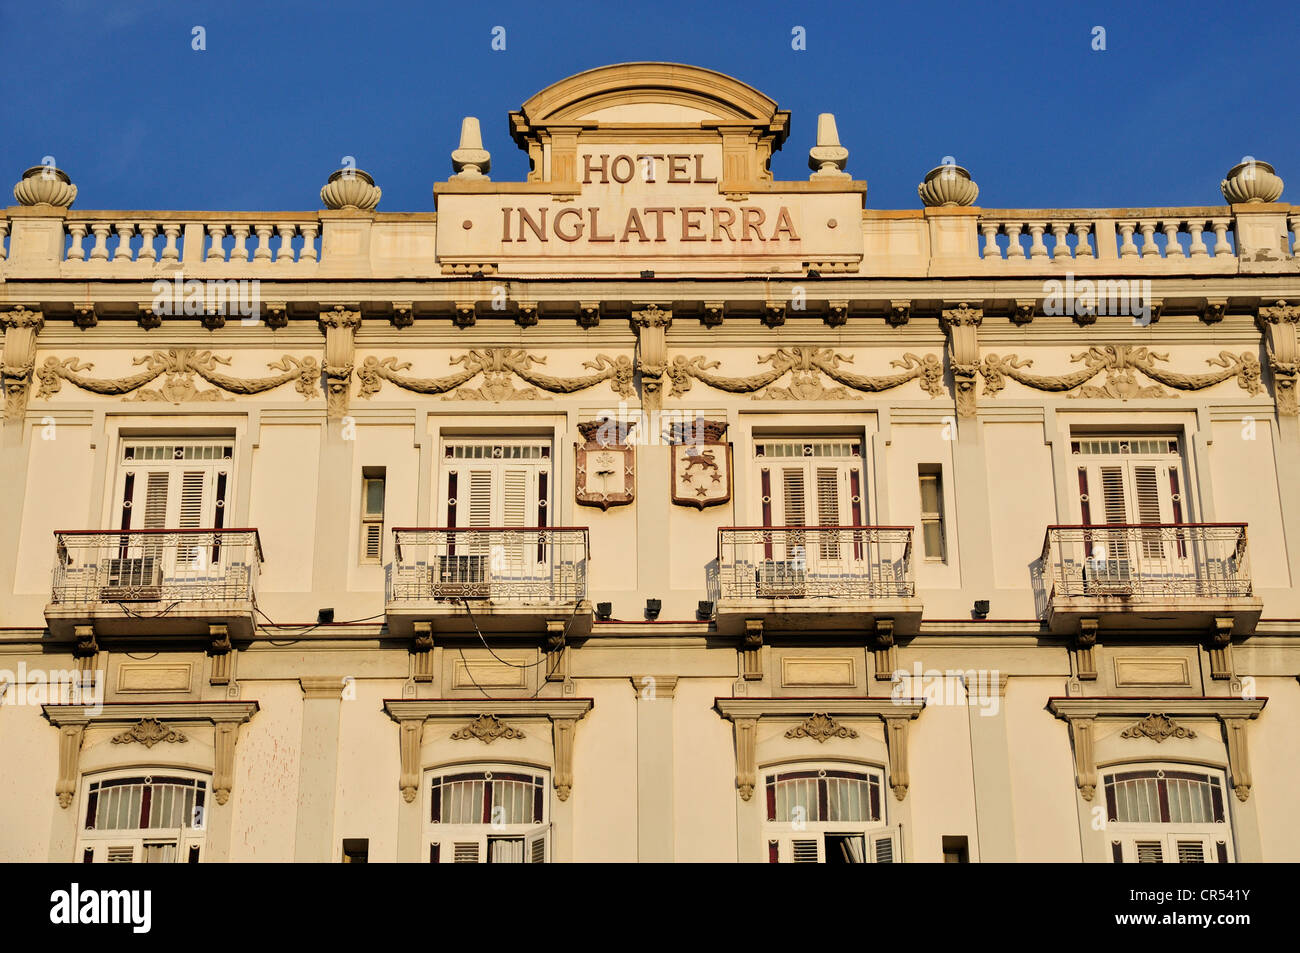 La facciata dell'Inglaterra Hotel Habana Vieja, l'Avana Vecchia Havana, Cuba, Caraibi Foto Stock